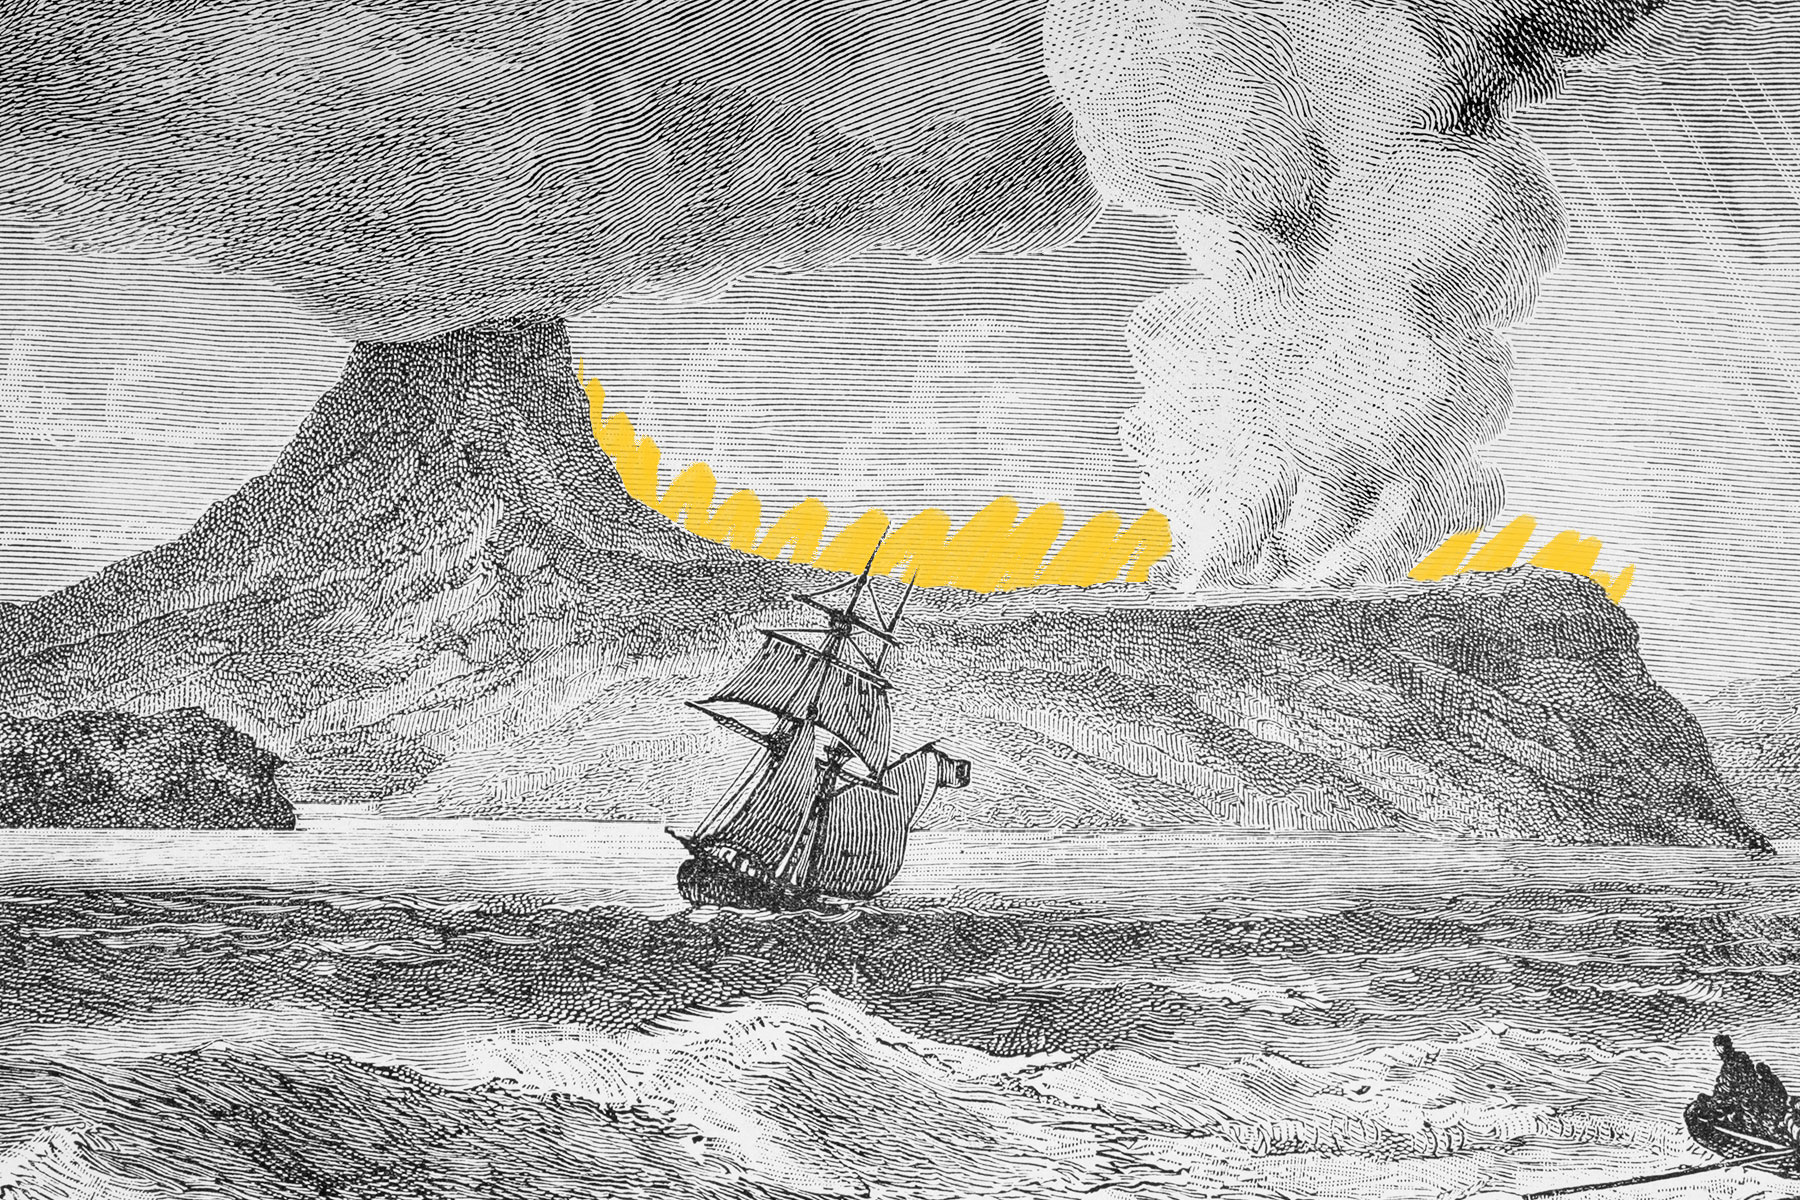 Krakatoa erupting 1883